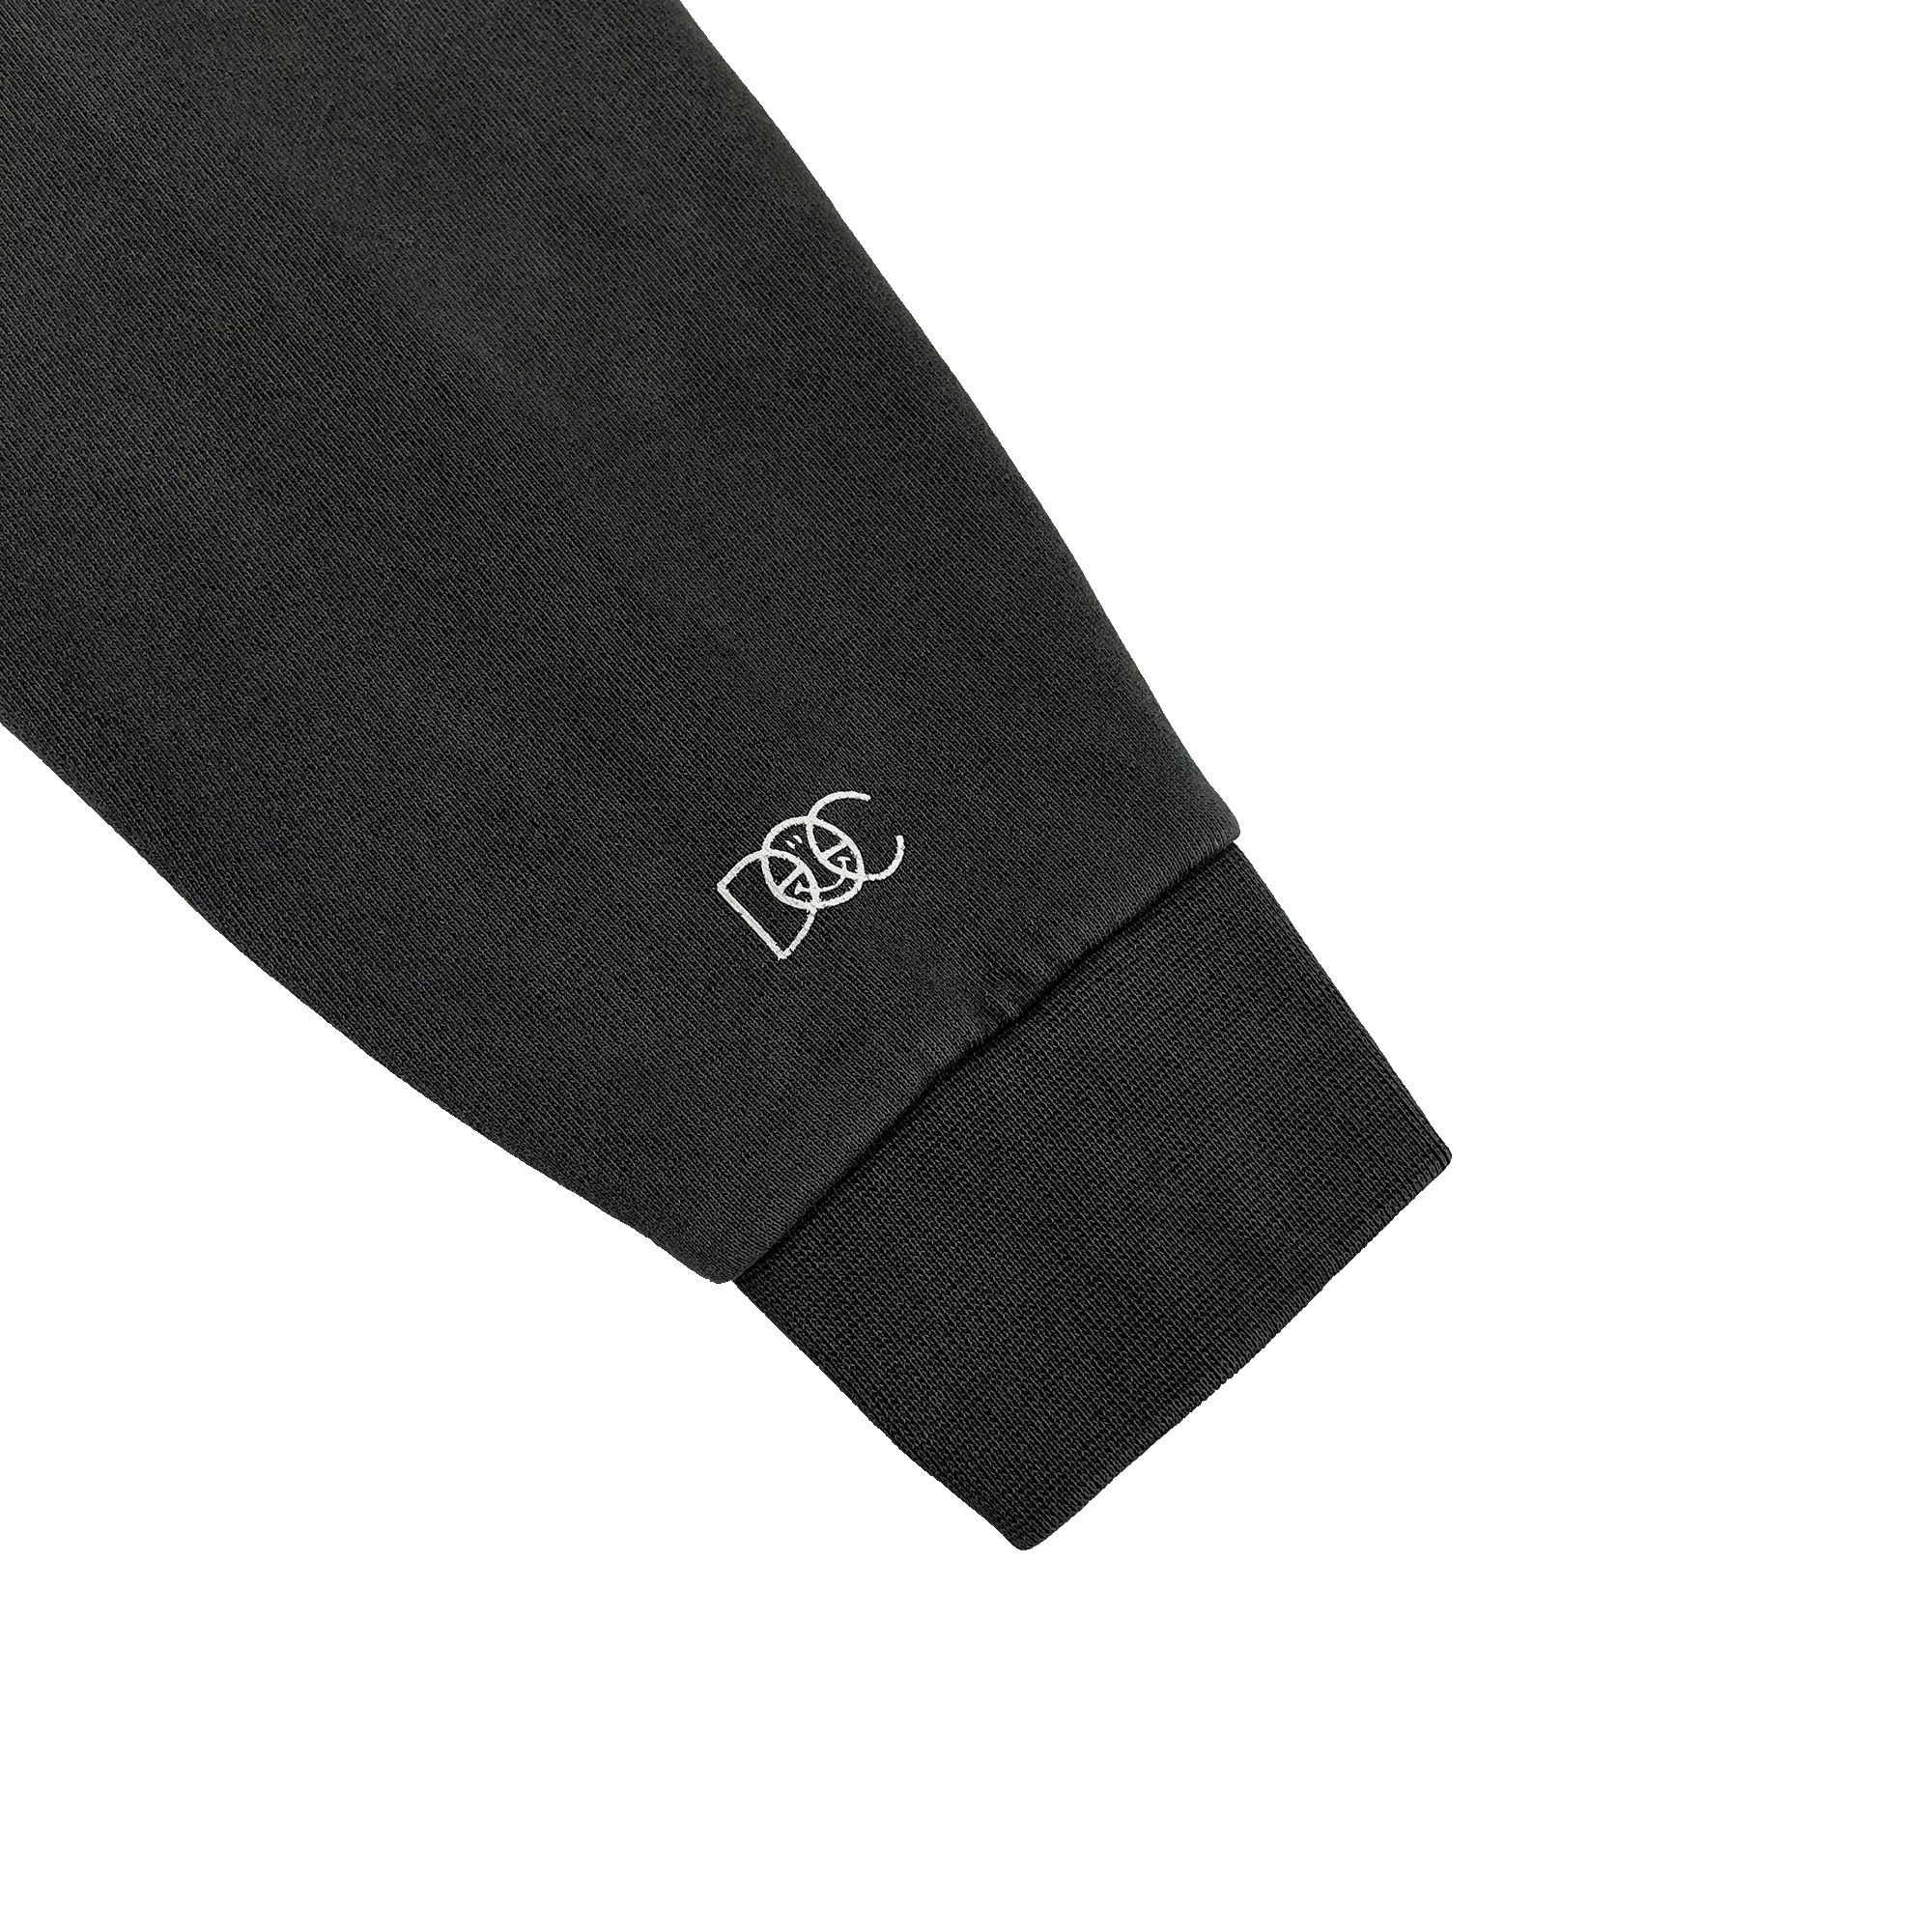 Close-up of white DOC logo wordmark on a pigment black pullover hoodie sweatshirt sleeve.